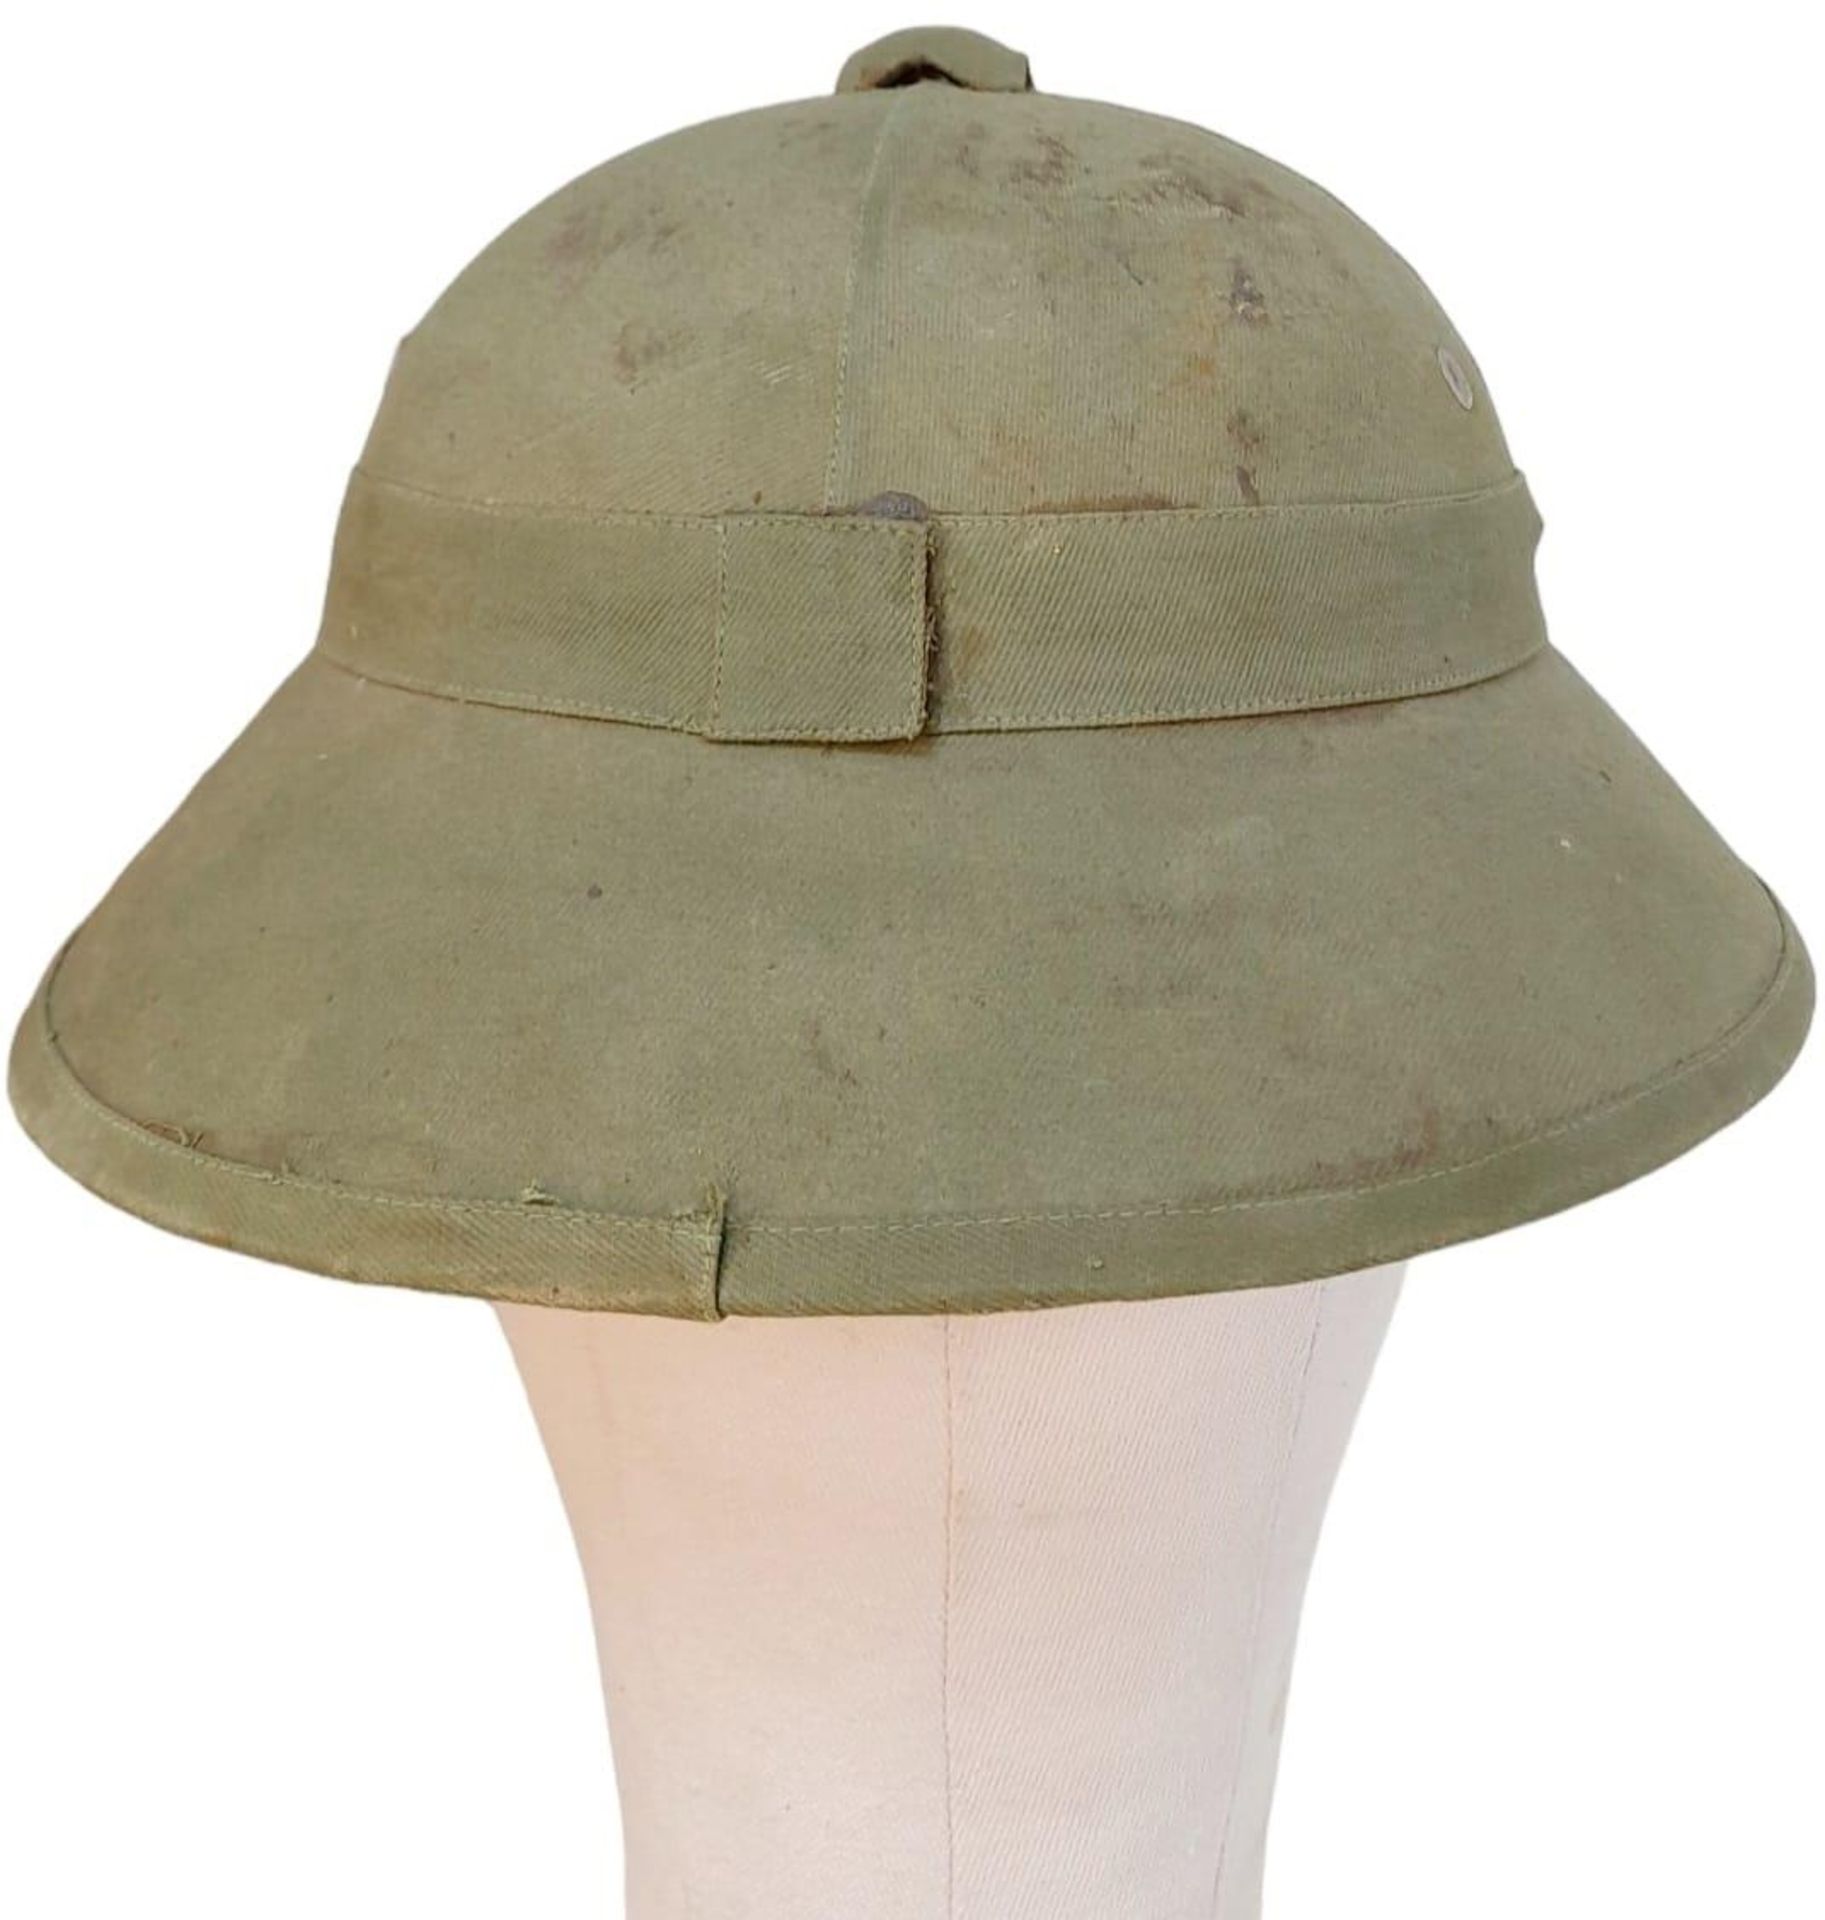 Vietnam War Era North Vietnamese Army (NVA) Fiber Helmet. - Image 3 of 5